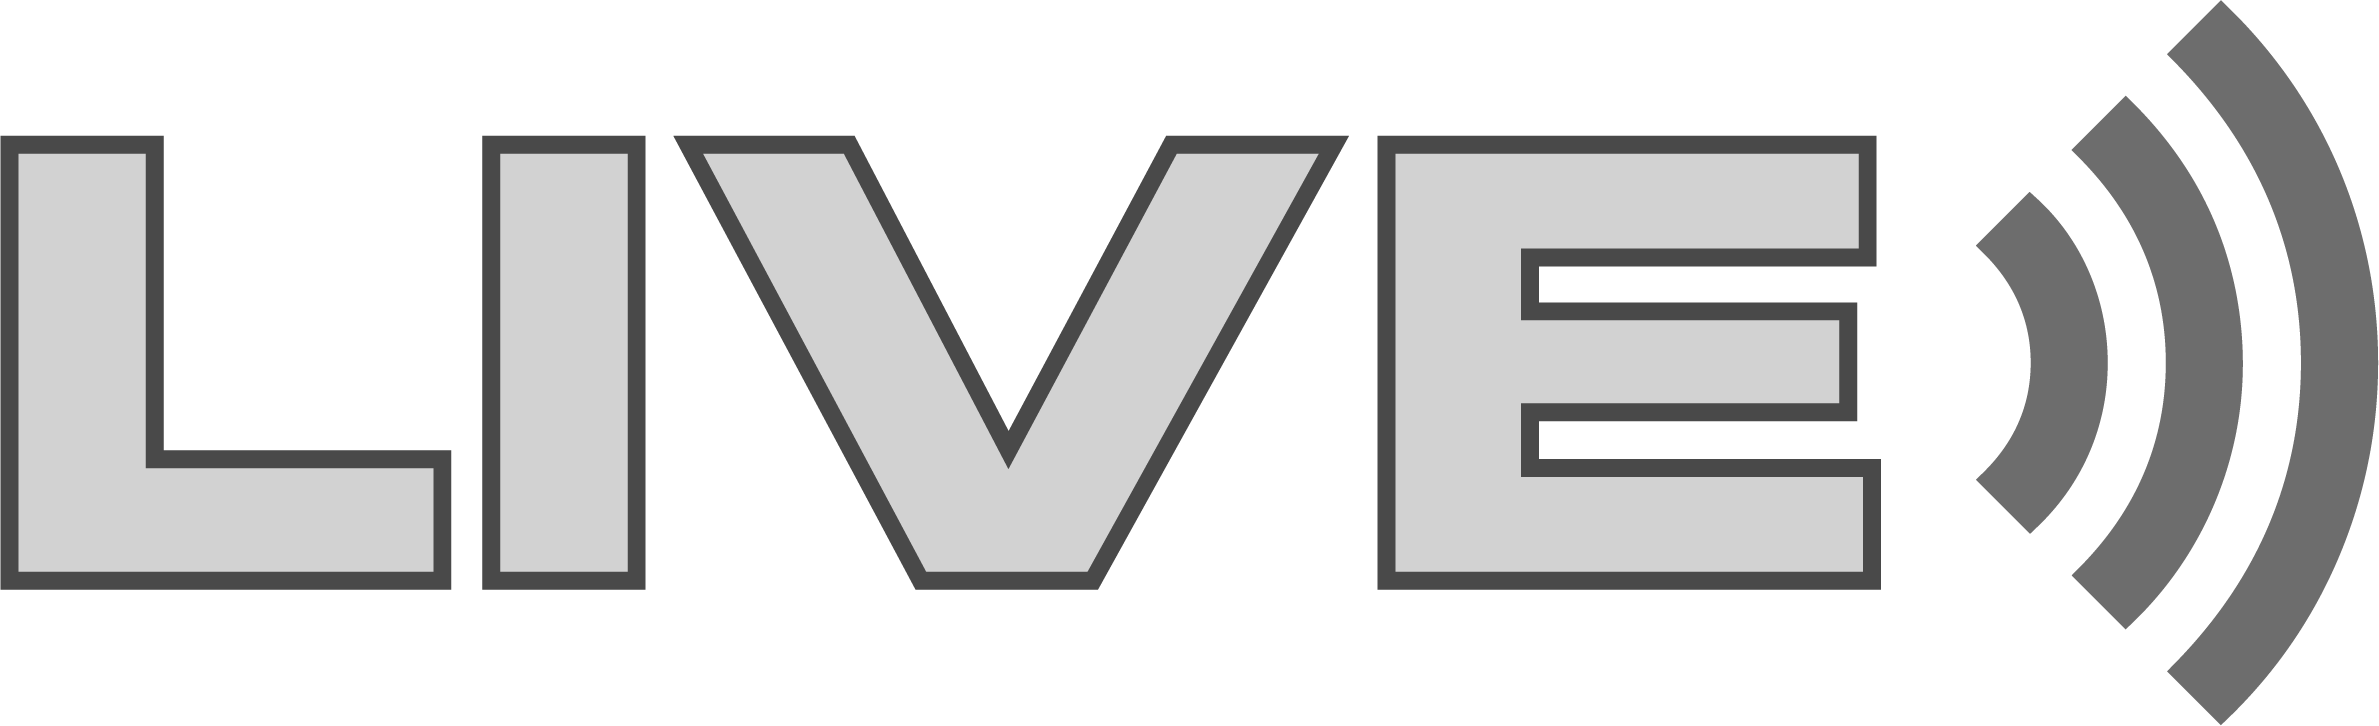 vrx live logo